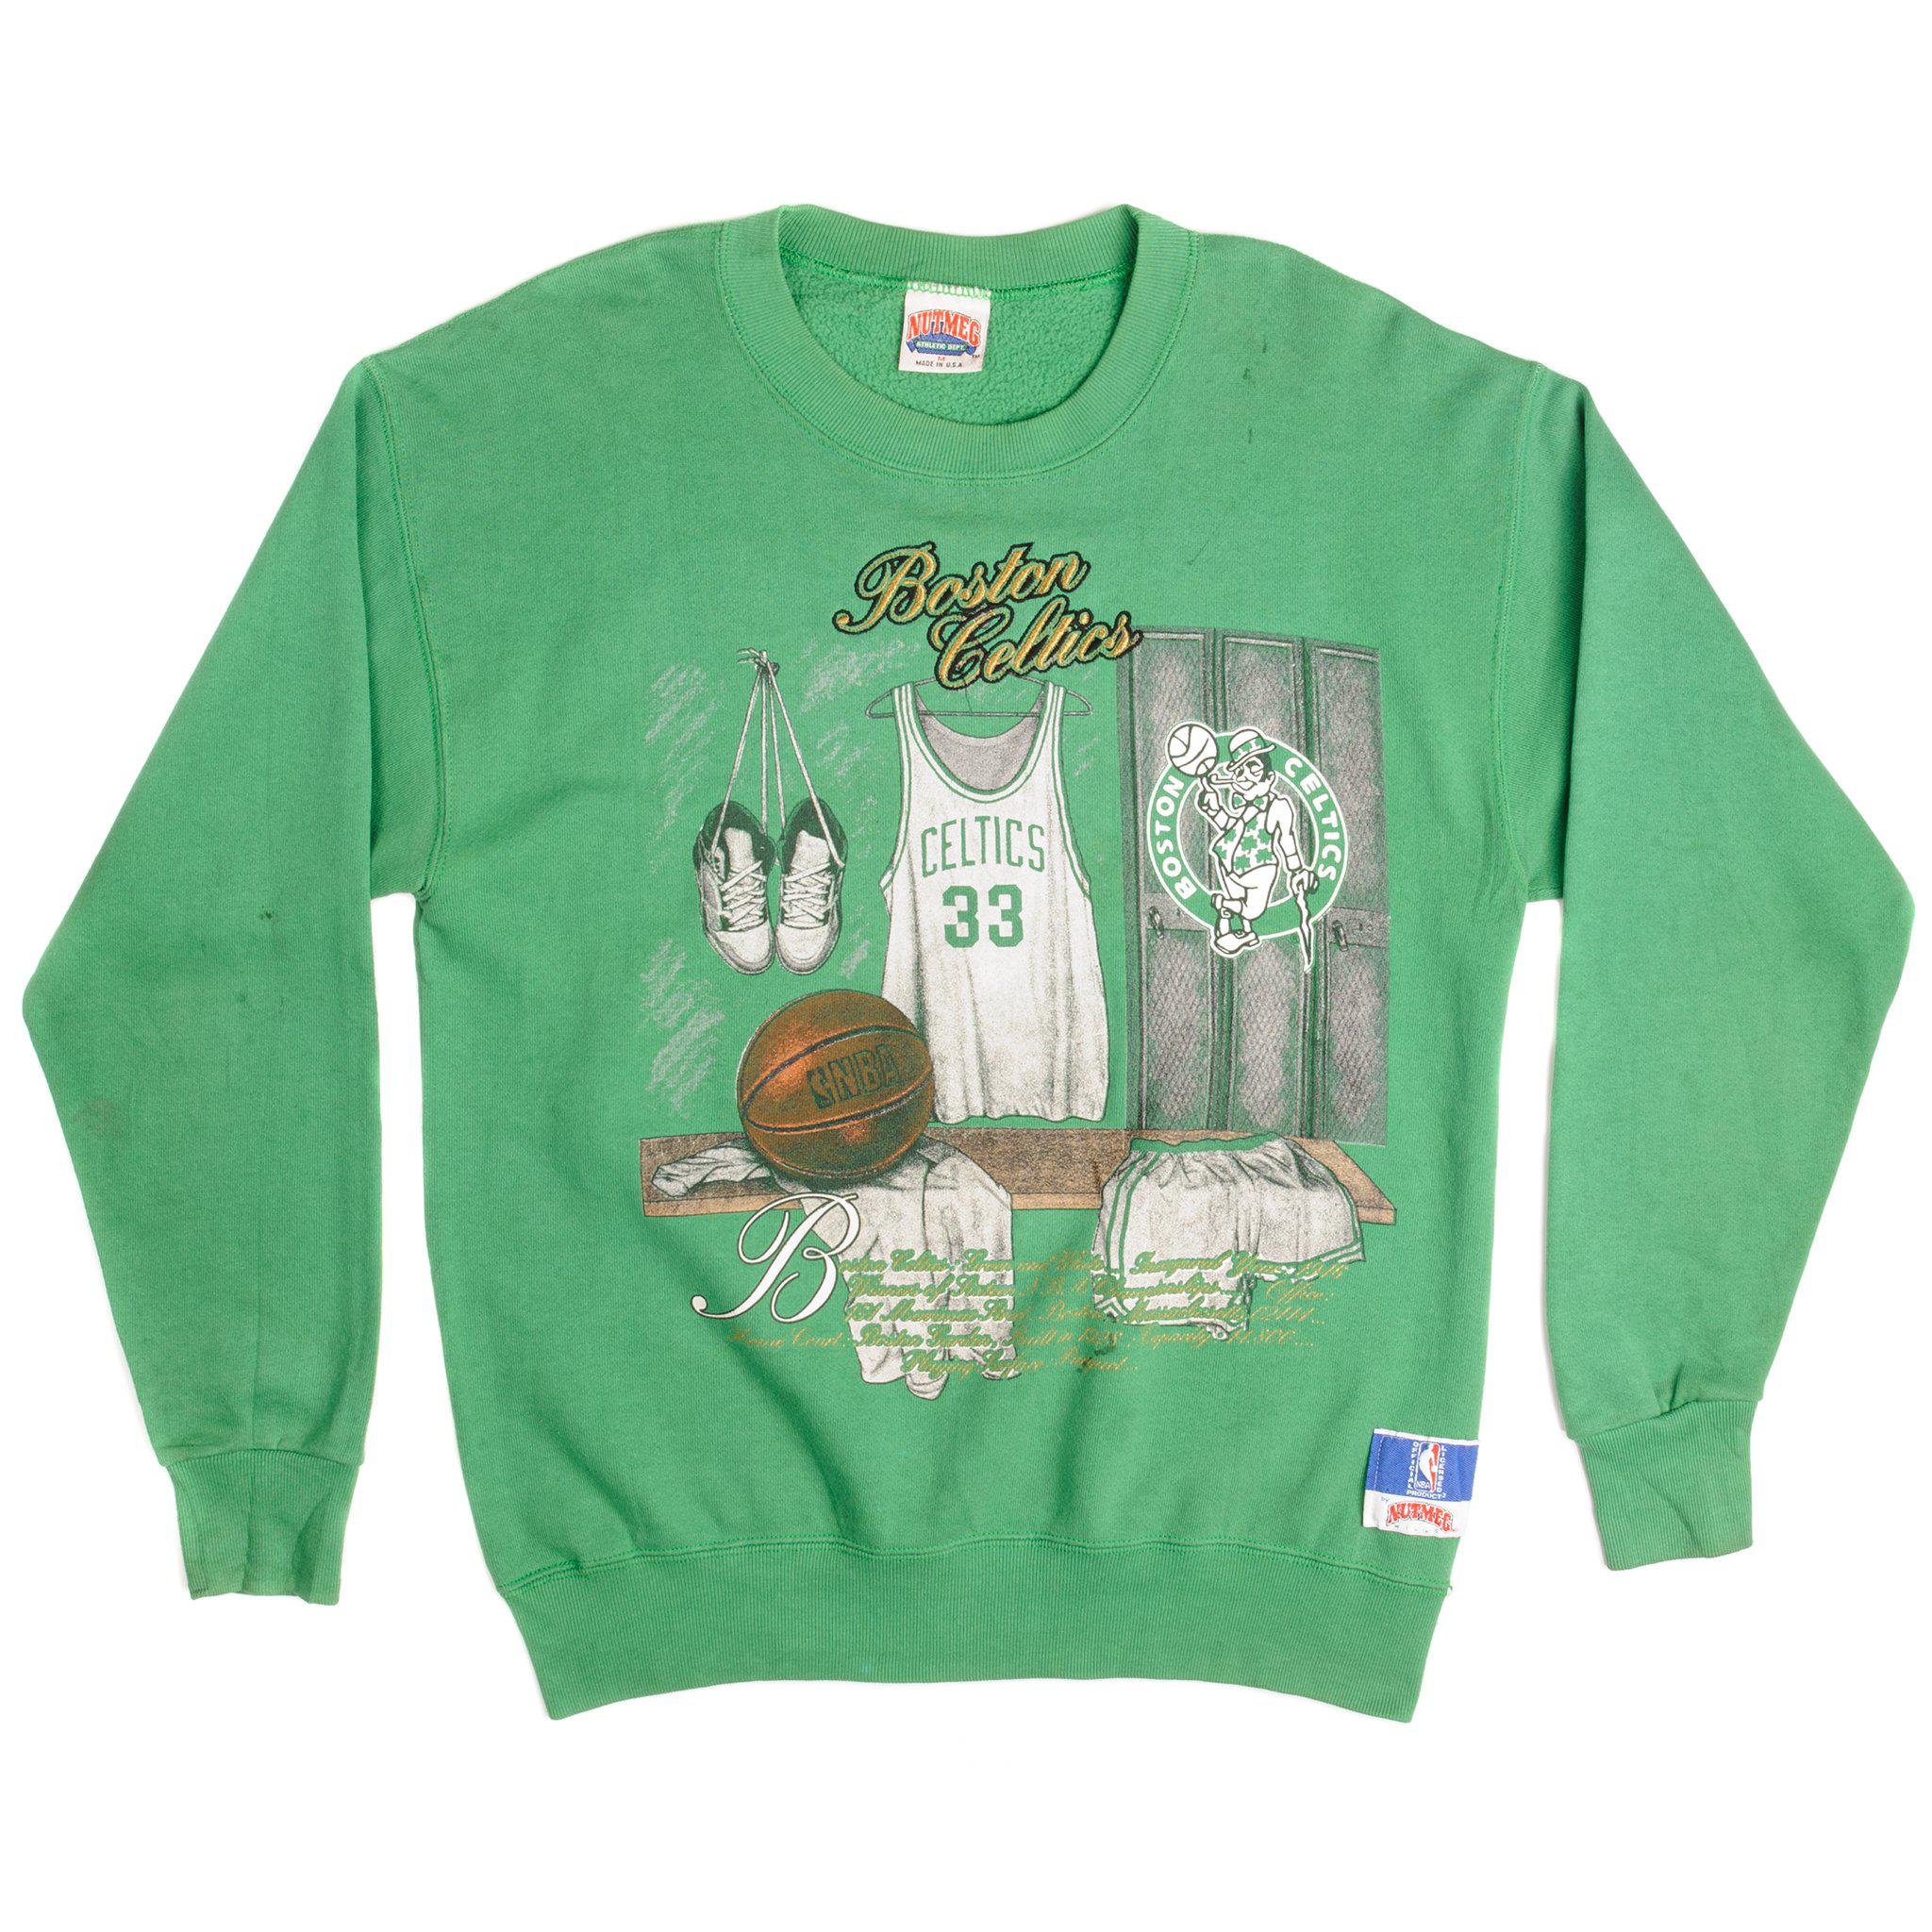 Vintage Nba Basketball 1946 Boston Celtics Sweatshirt - Anynee